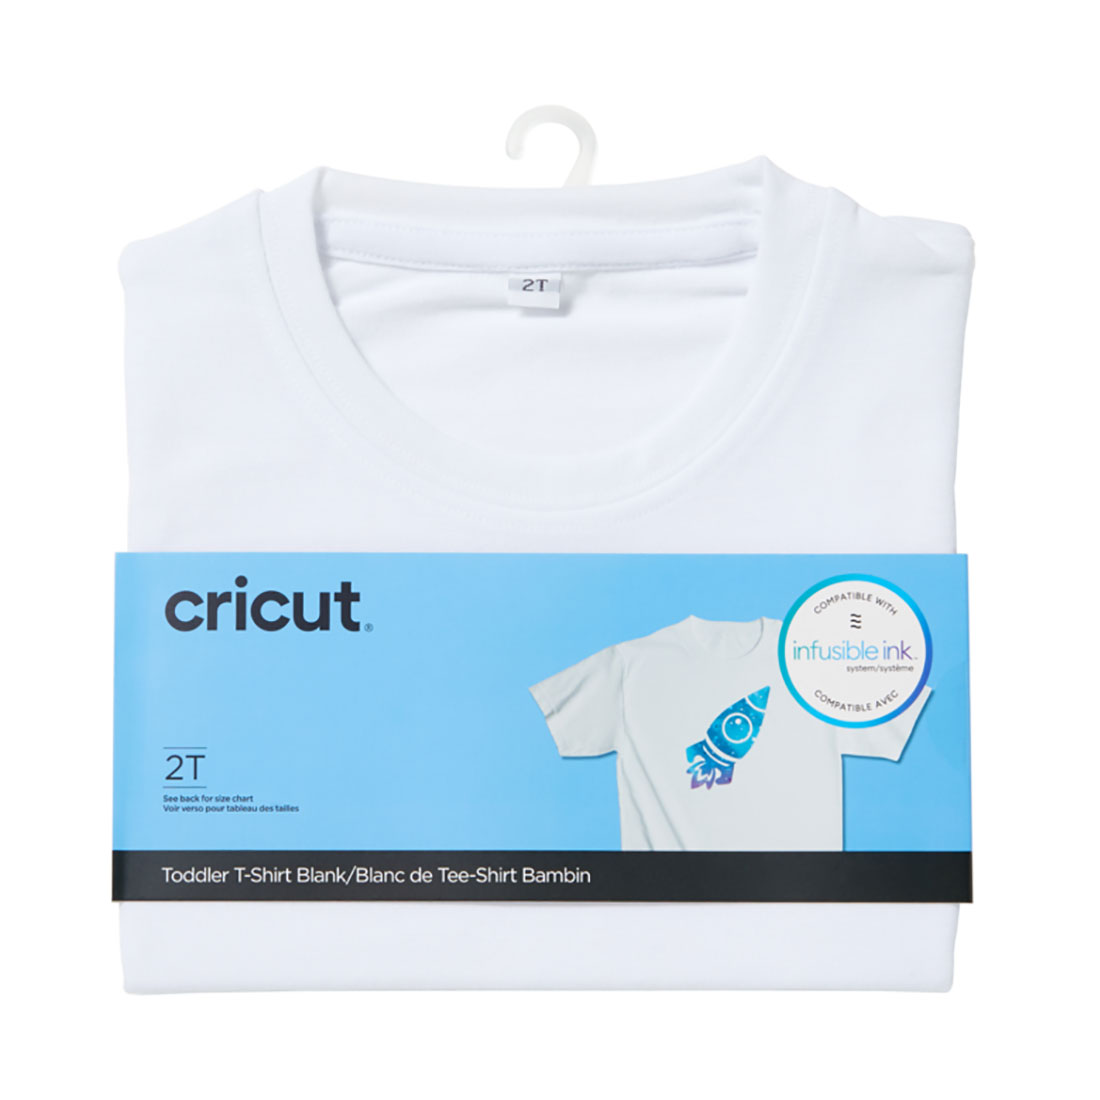  Cricut Unisex Kids Youth T-shirt BLANK TSHIRT SMALL, Youth  Small, Small-X-Large US